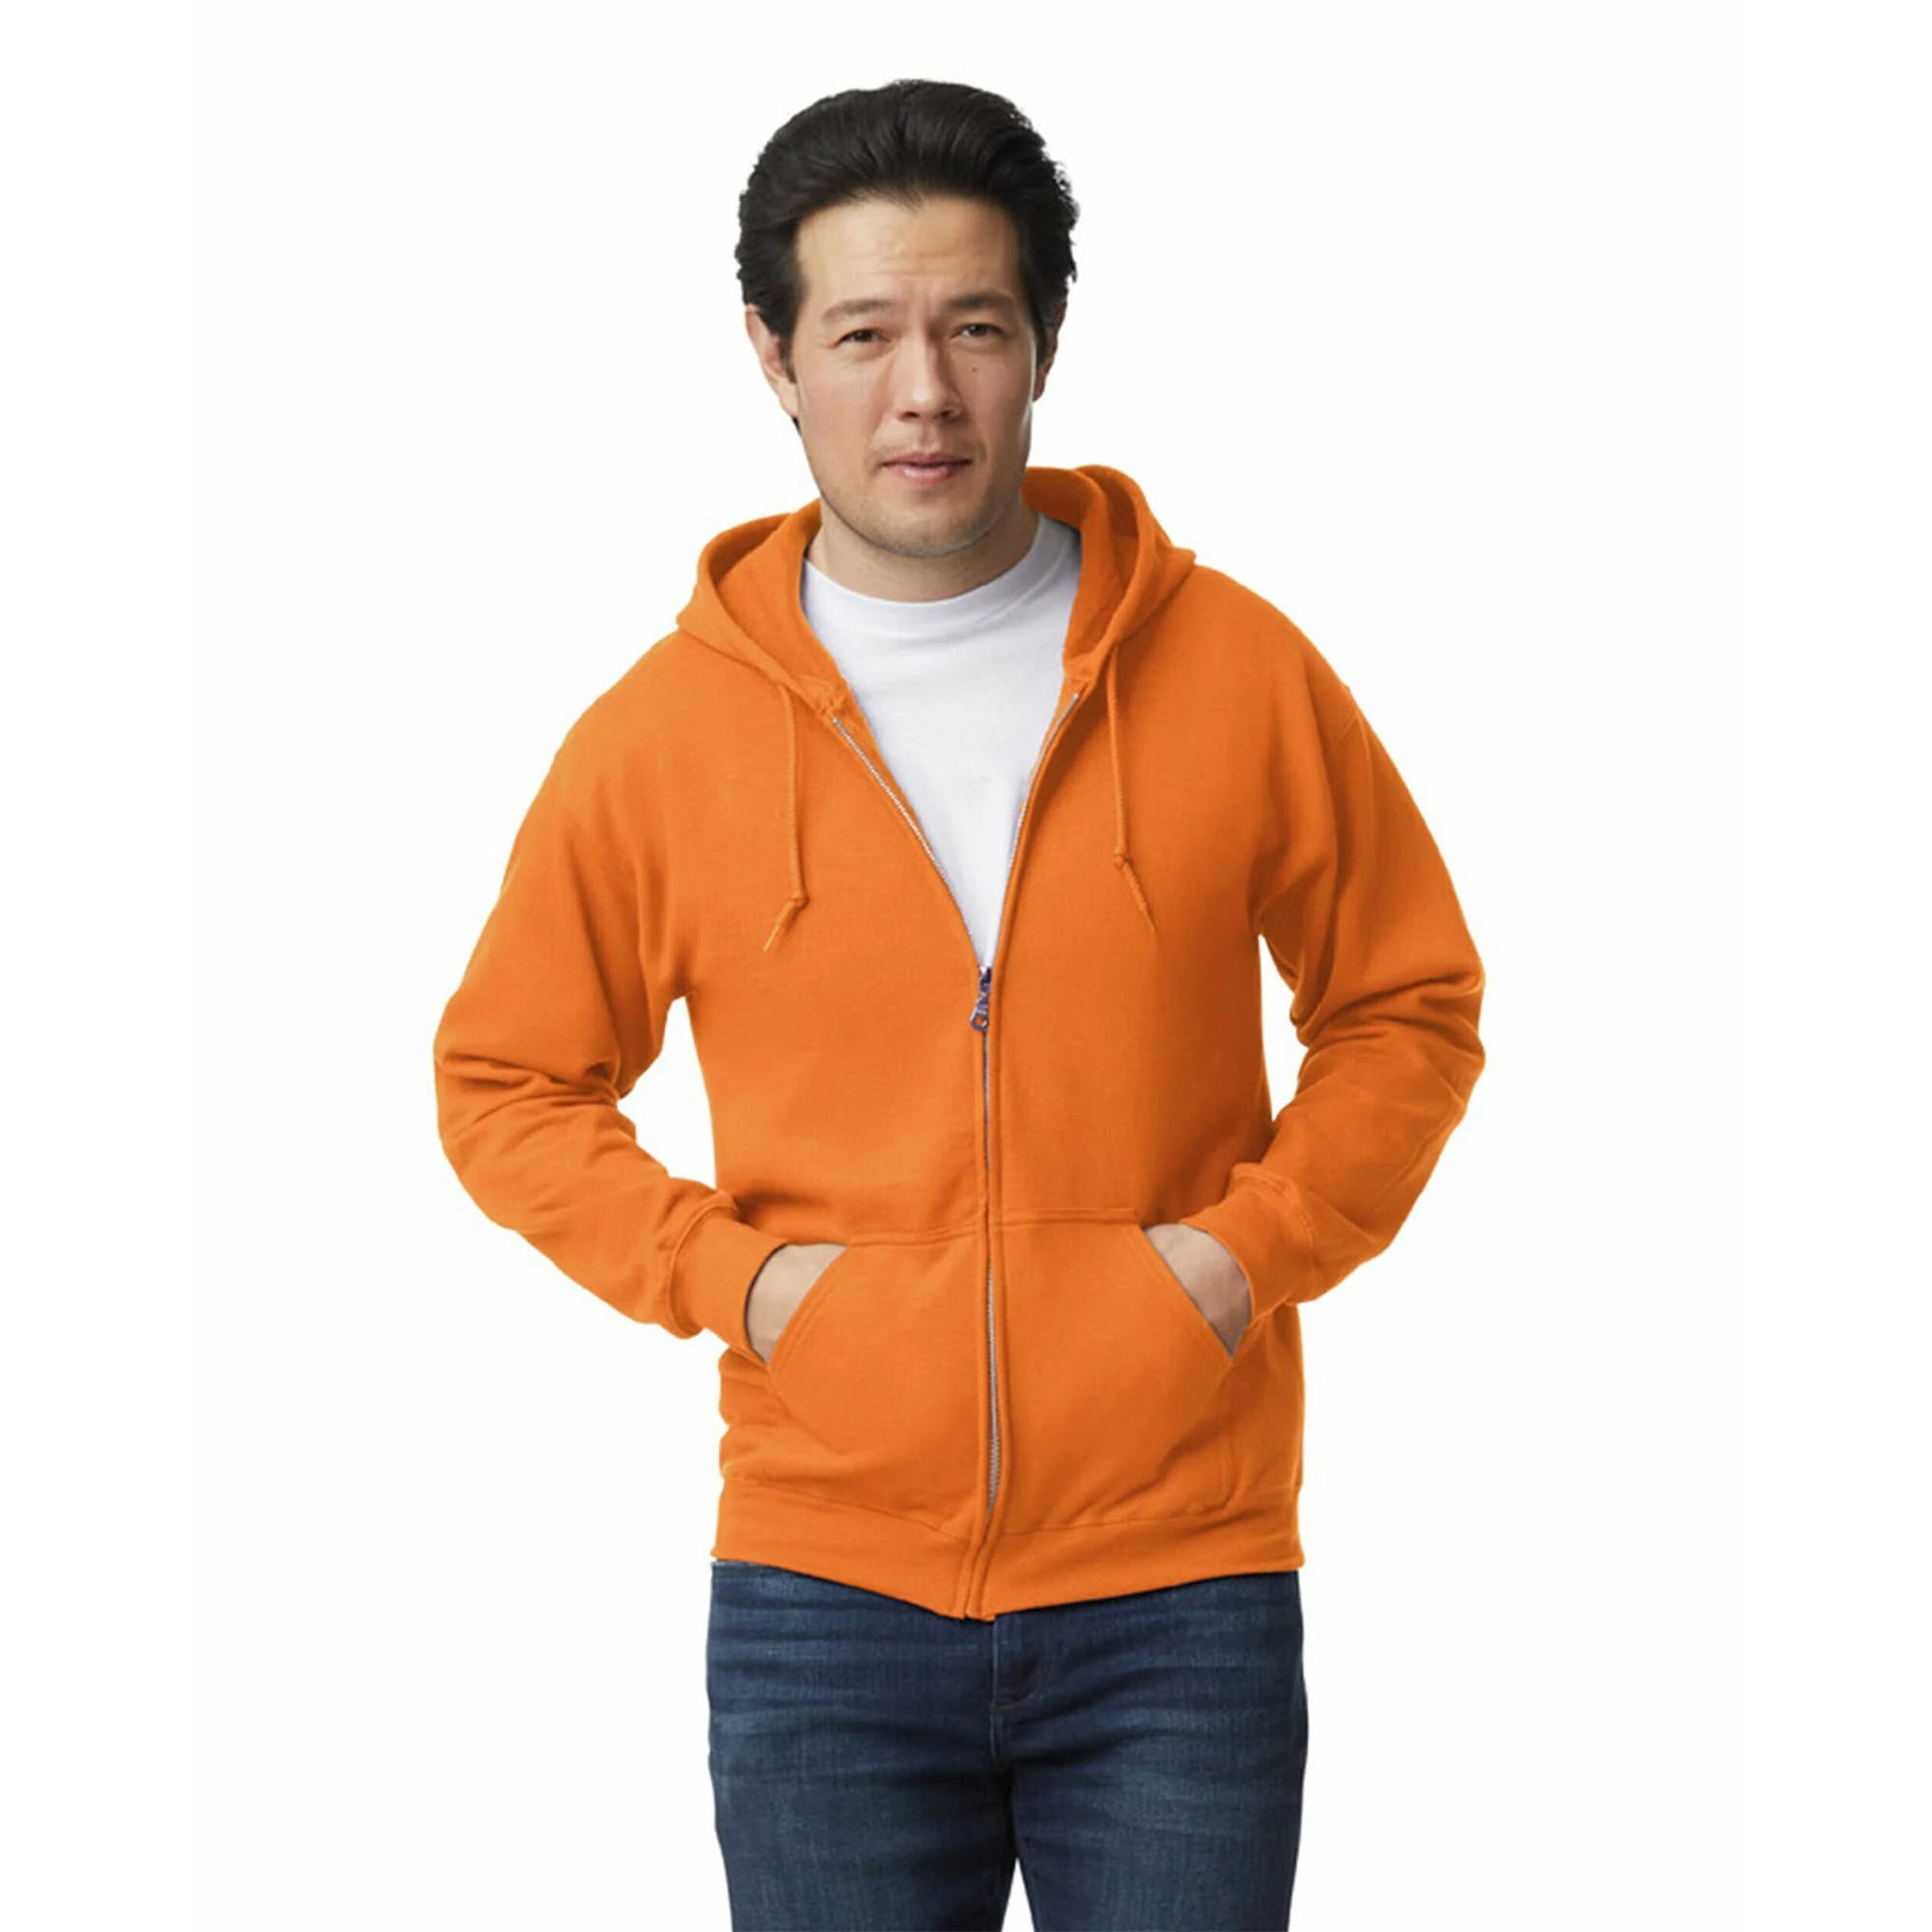 Medium Orange Full Zip Hoodie for Men | Image